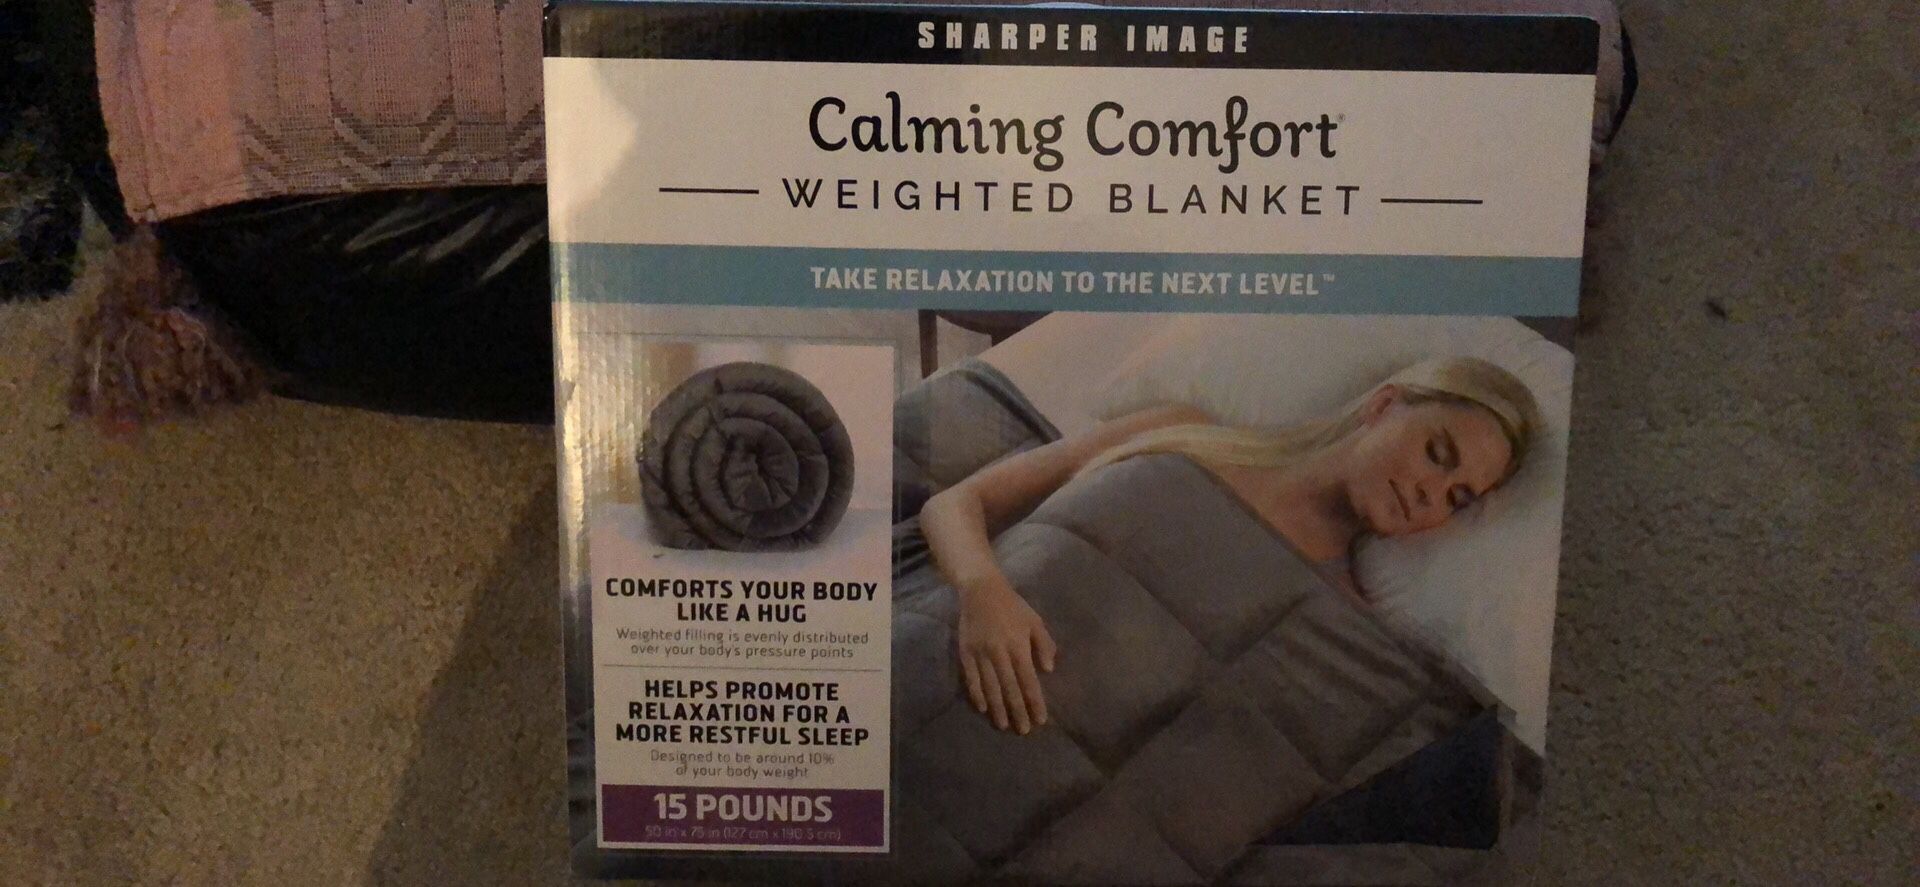 Weighted Blanket- Sharper Image